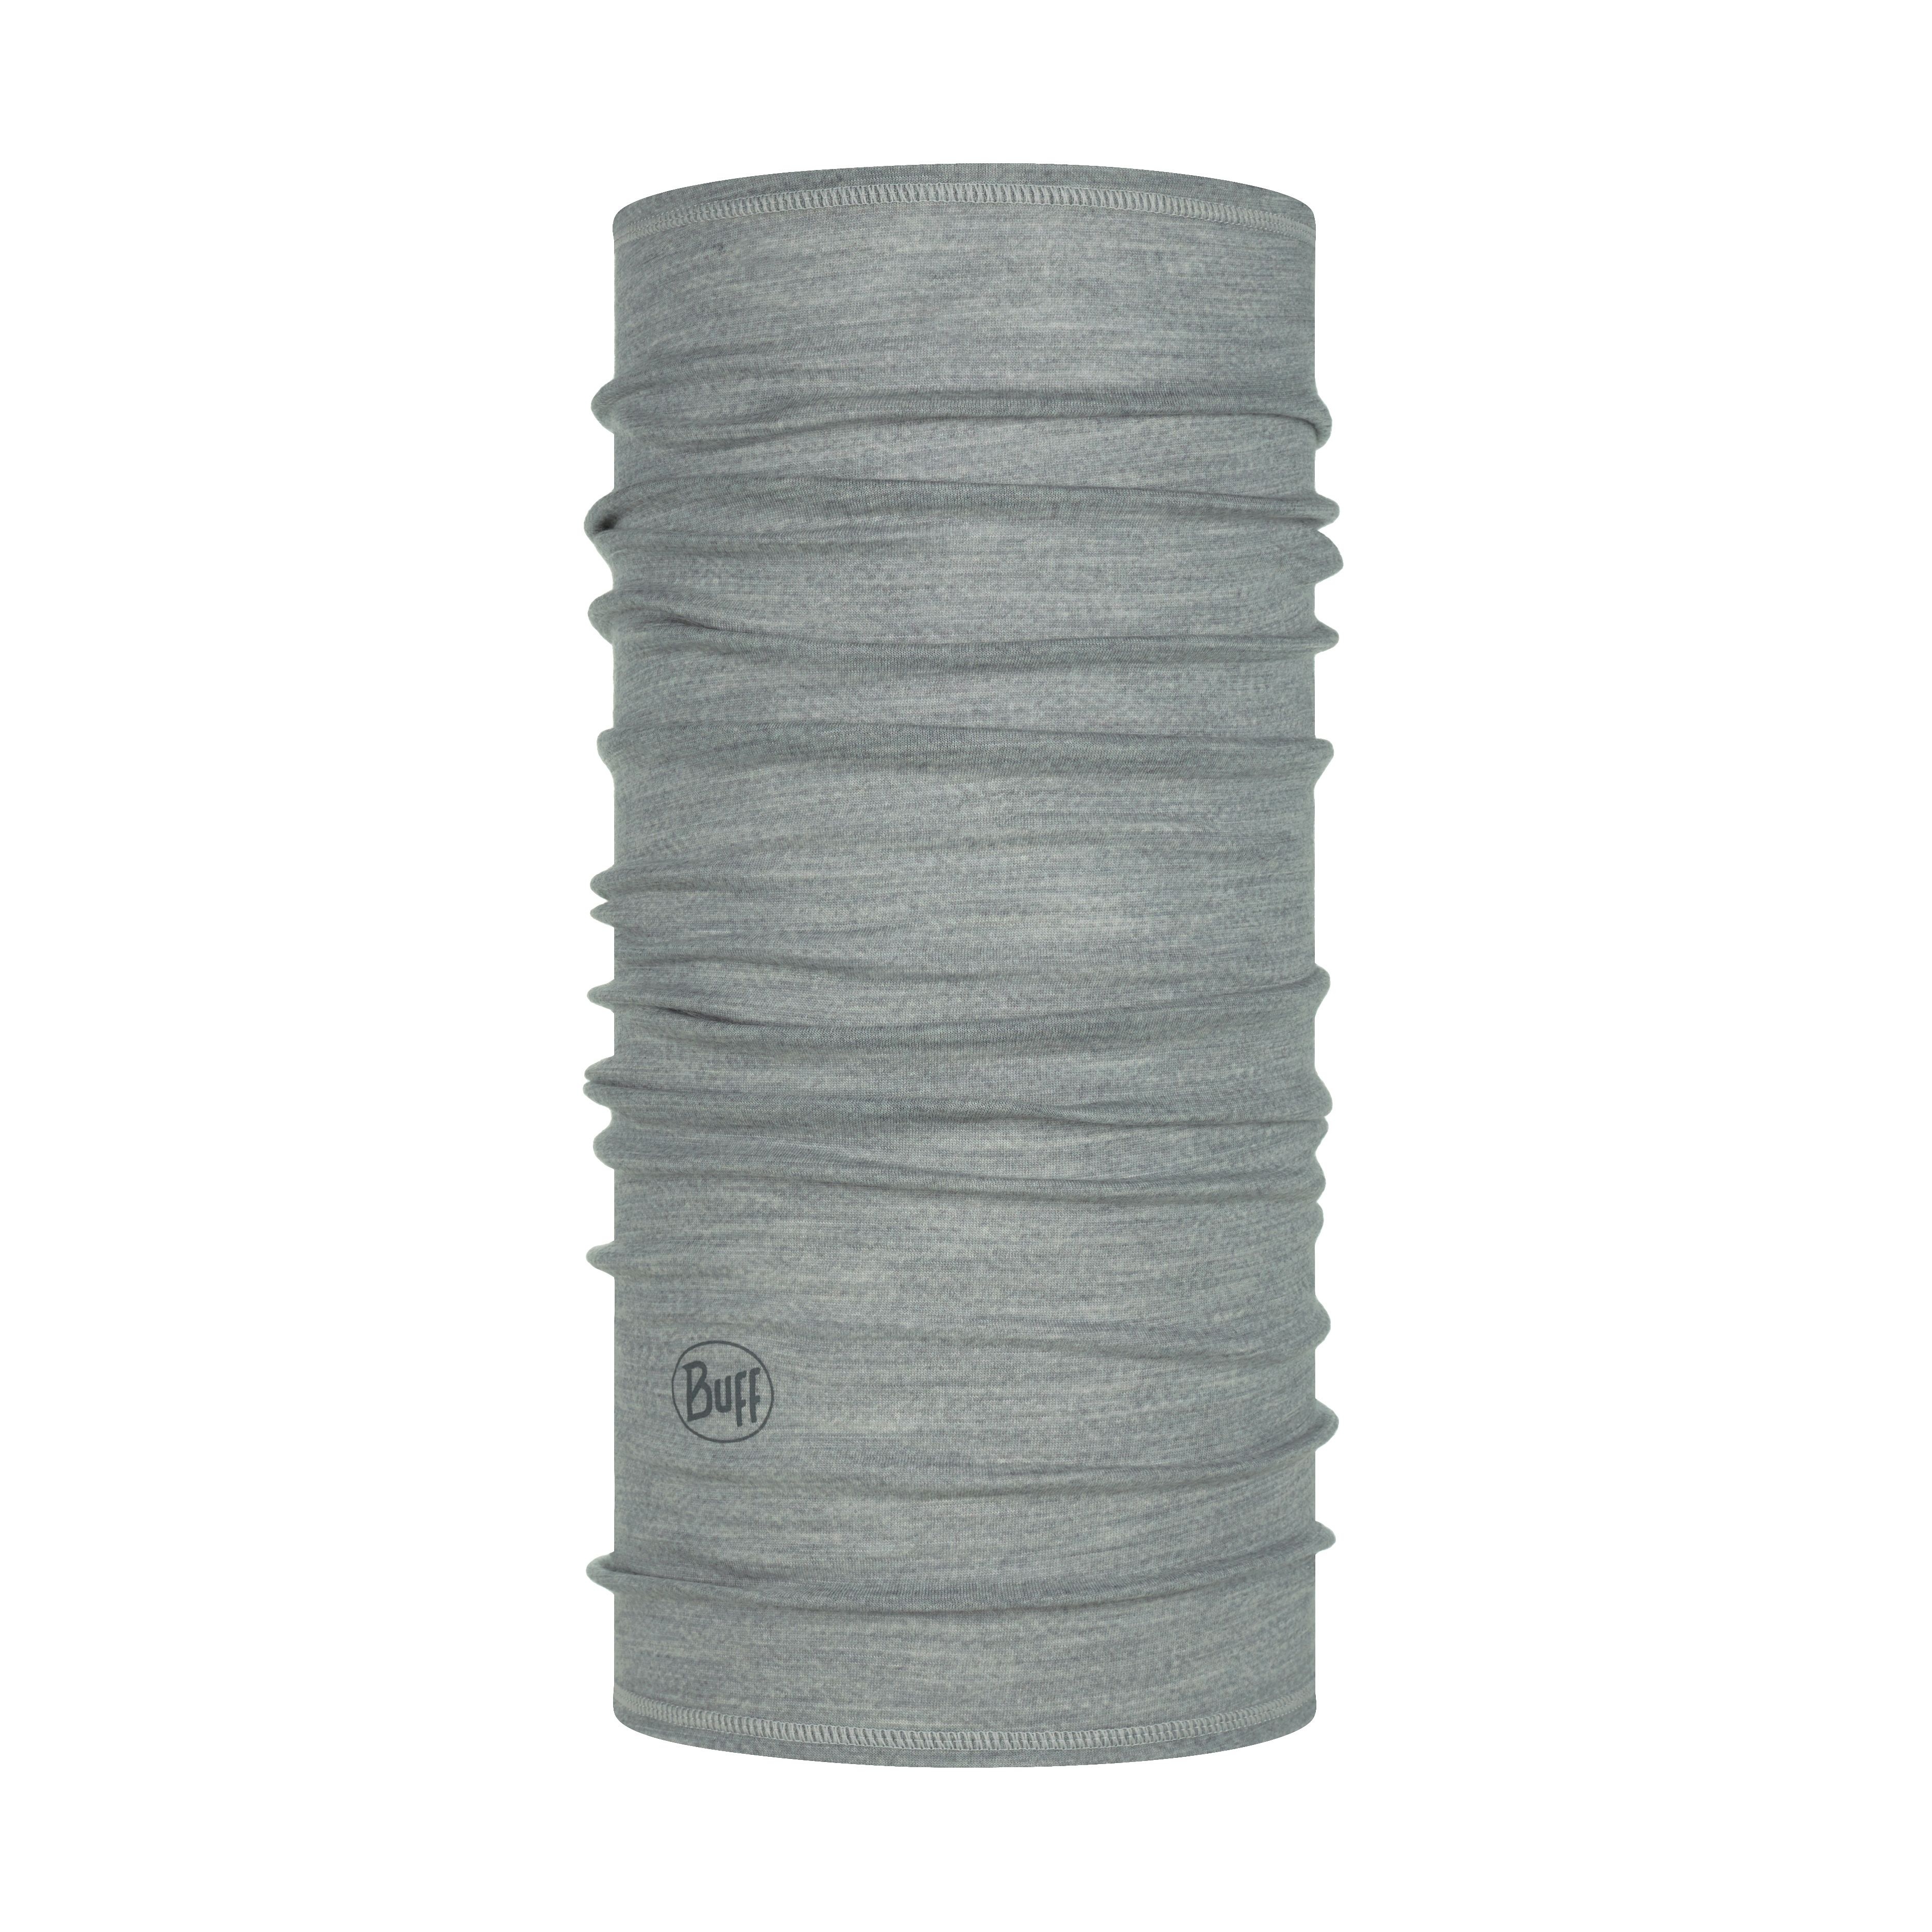 Unisex Solid Light Grey Lightweight Merino Neckwear